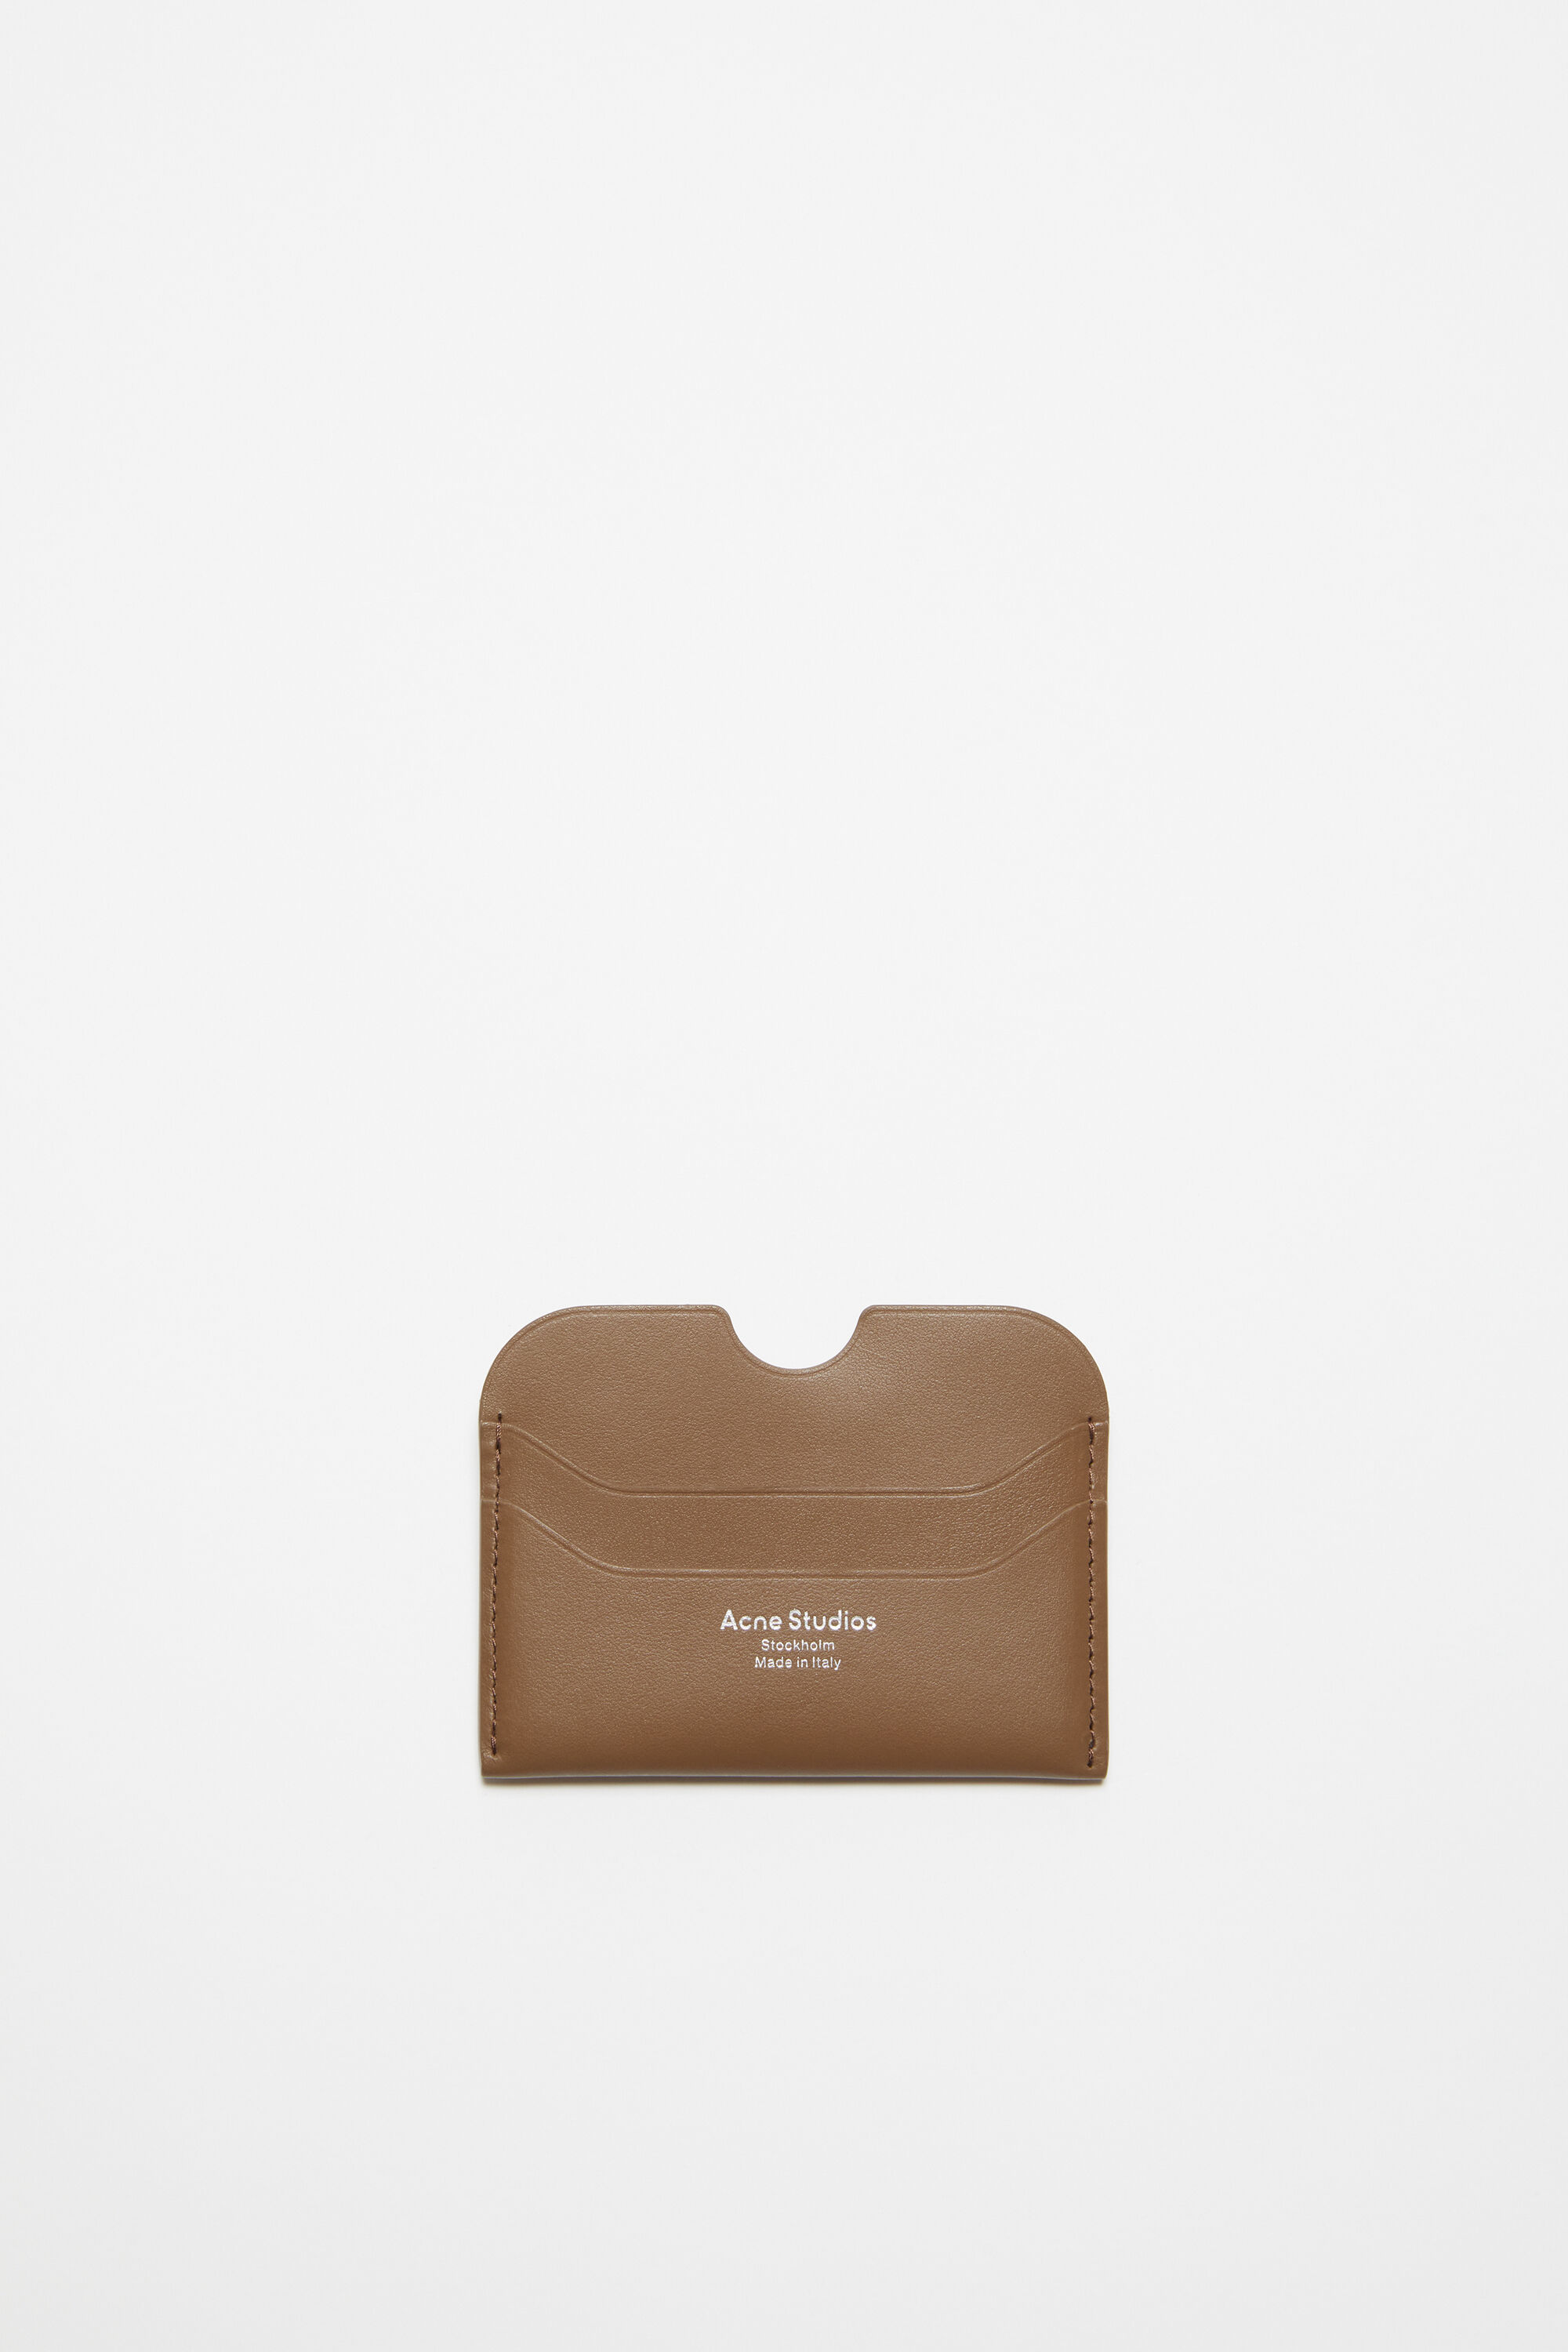 Acne Studios - Leather card holder - Camel brown